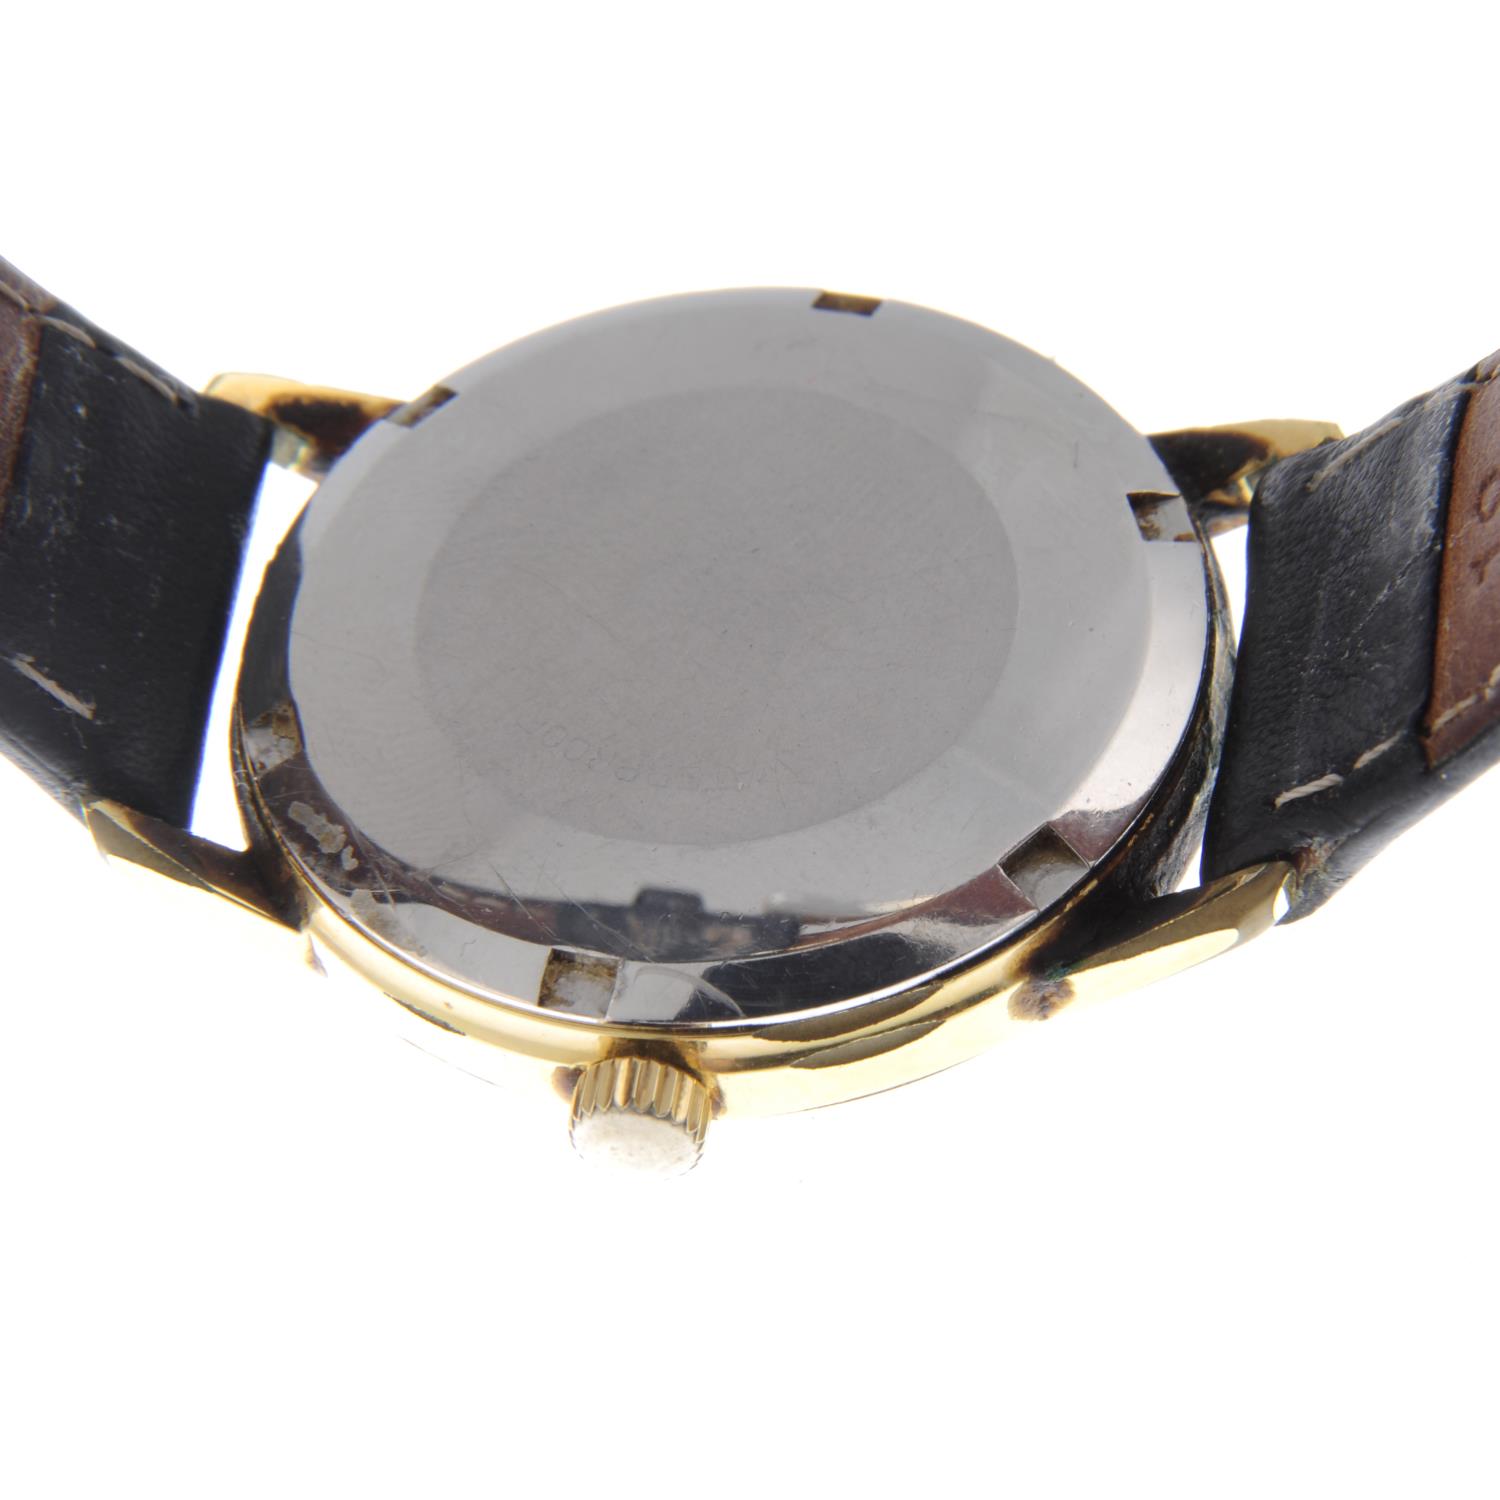 OMEGA - a gentleman's Genève wrist watch. - Image 3 of 4